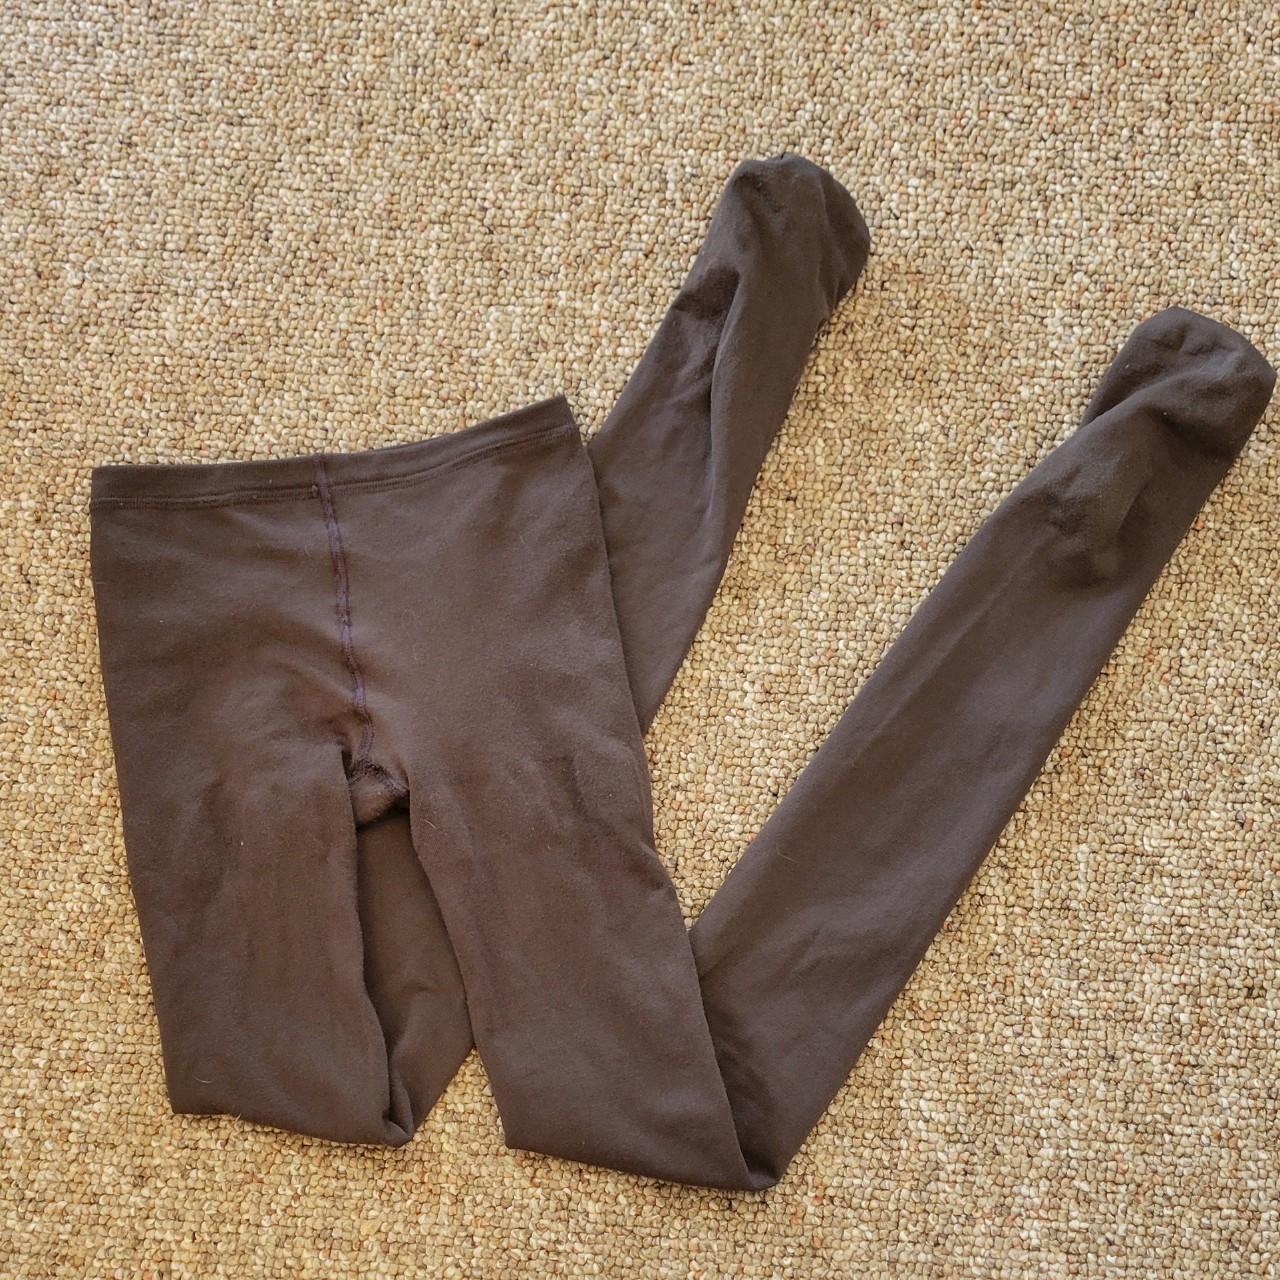 thigh solid grey tights. size small/medium - Depop